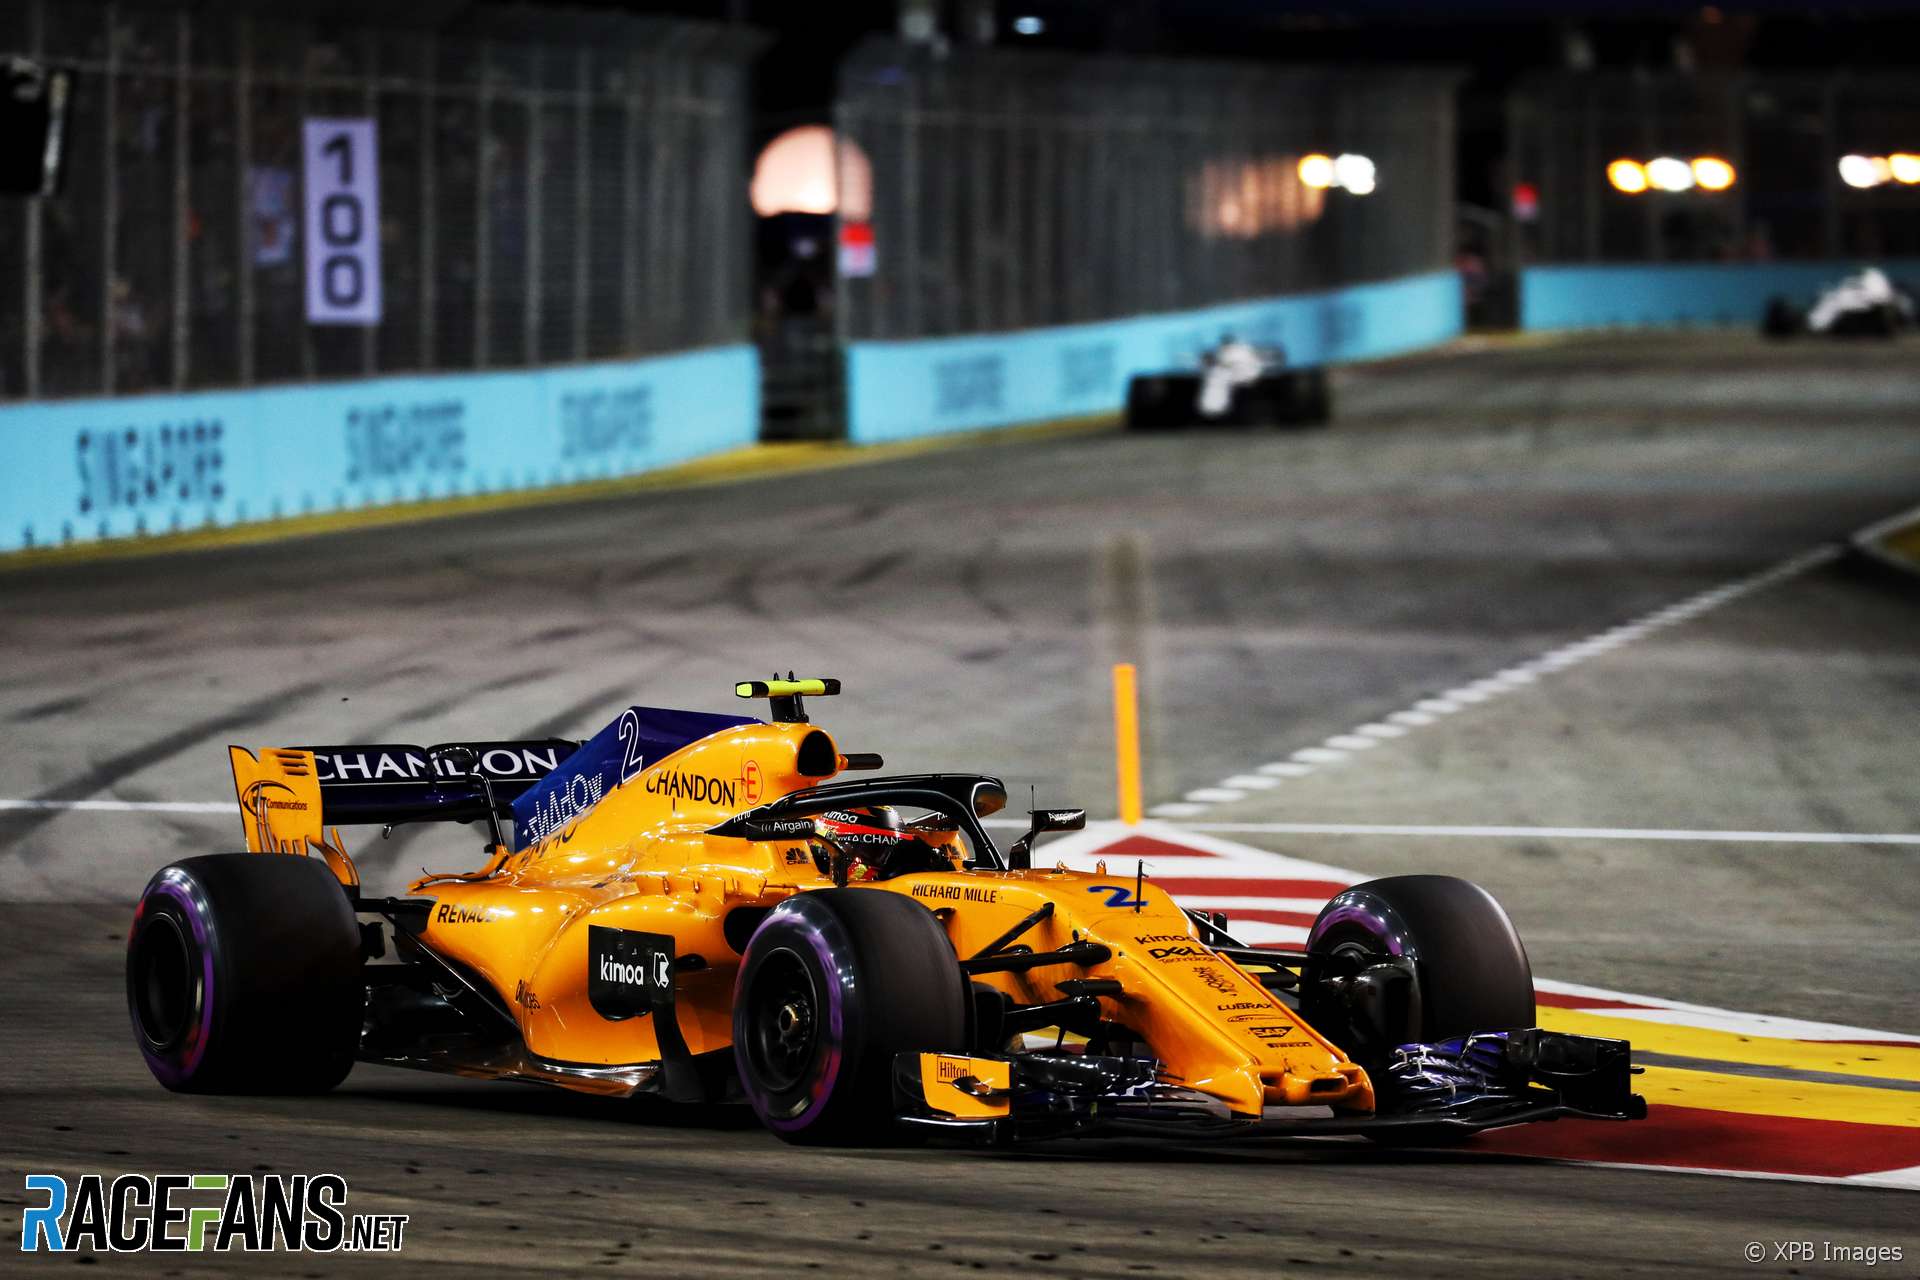 Stoffel Vandoorne, McLaren, Singapore, 2018